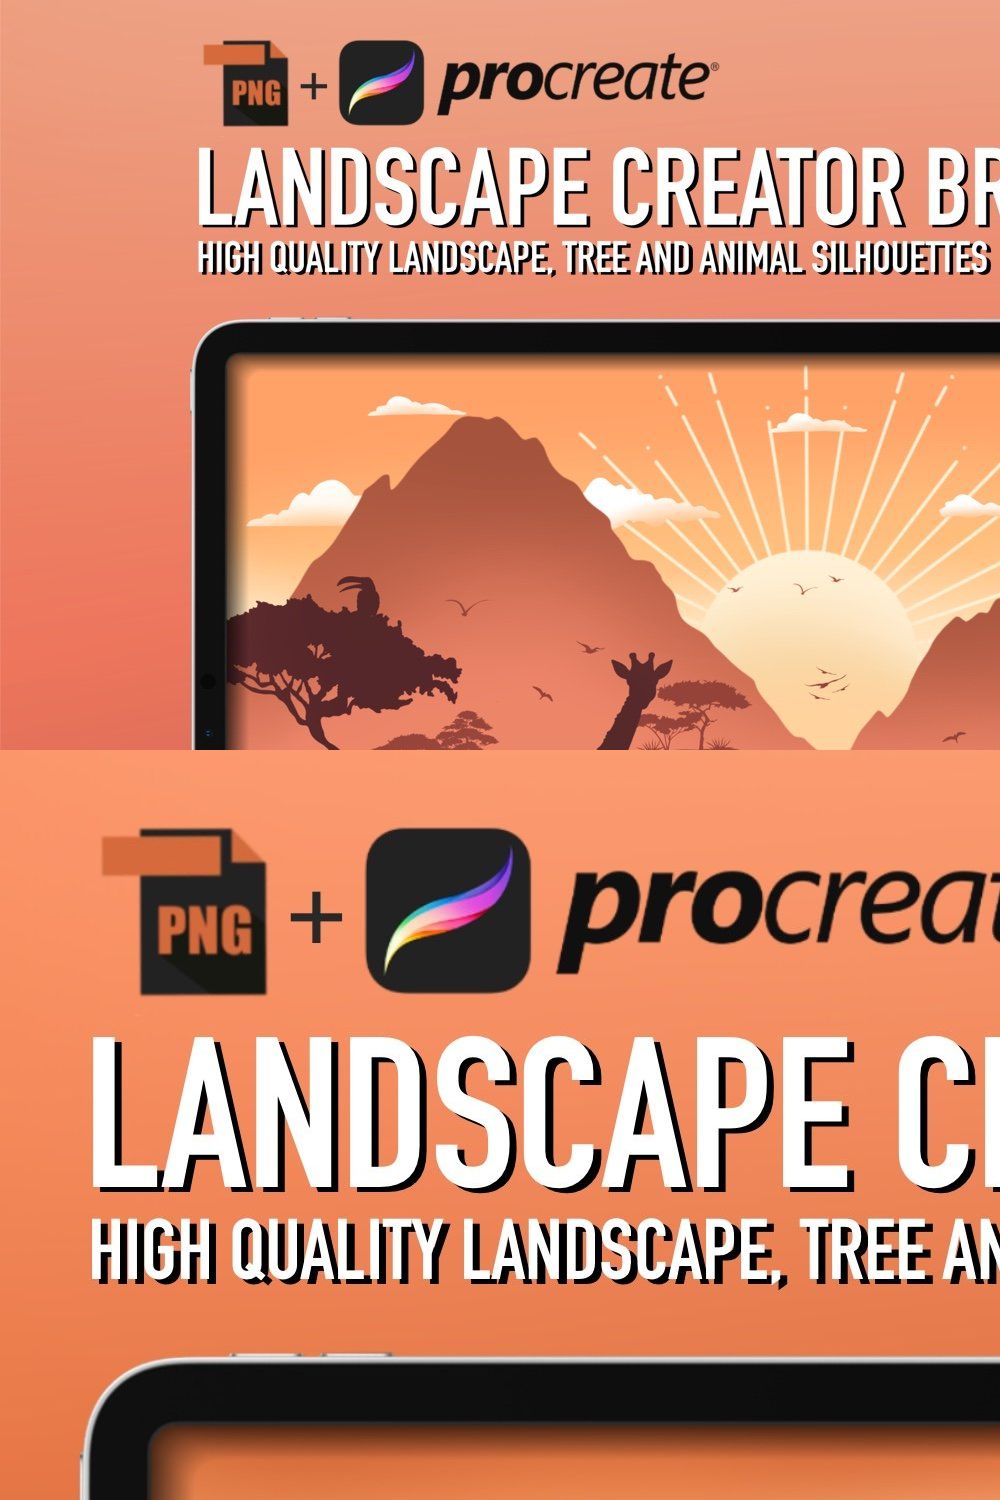 Procreate Landscape creator pinterest preview image.